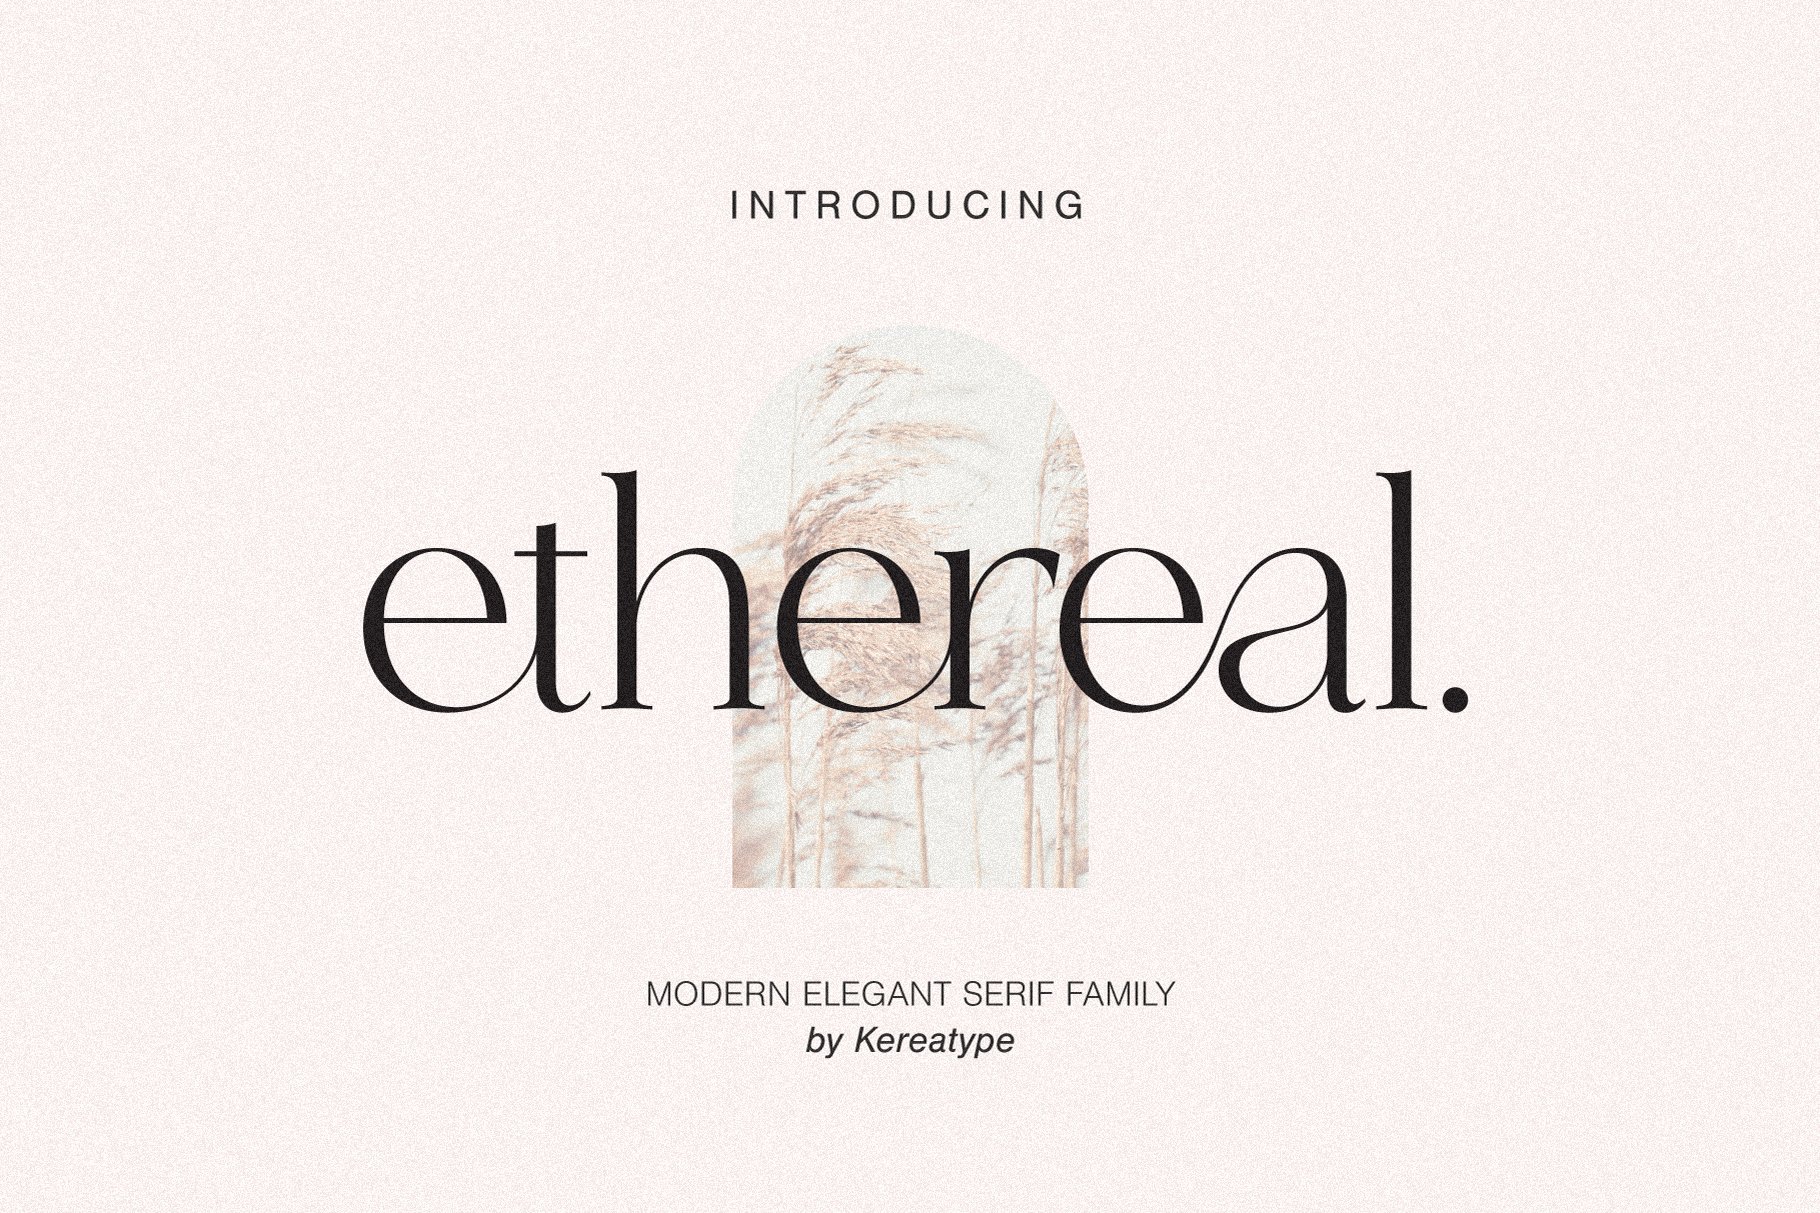 Ethereal - Elegant Serif Family cover image.